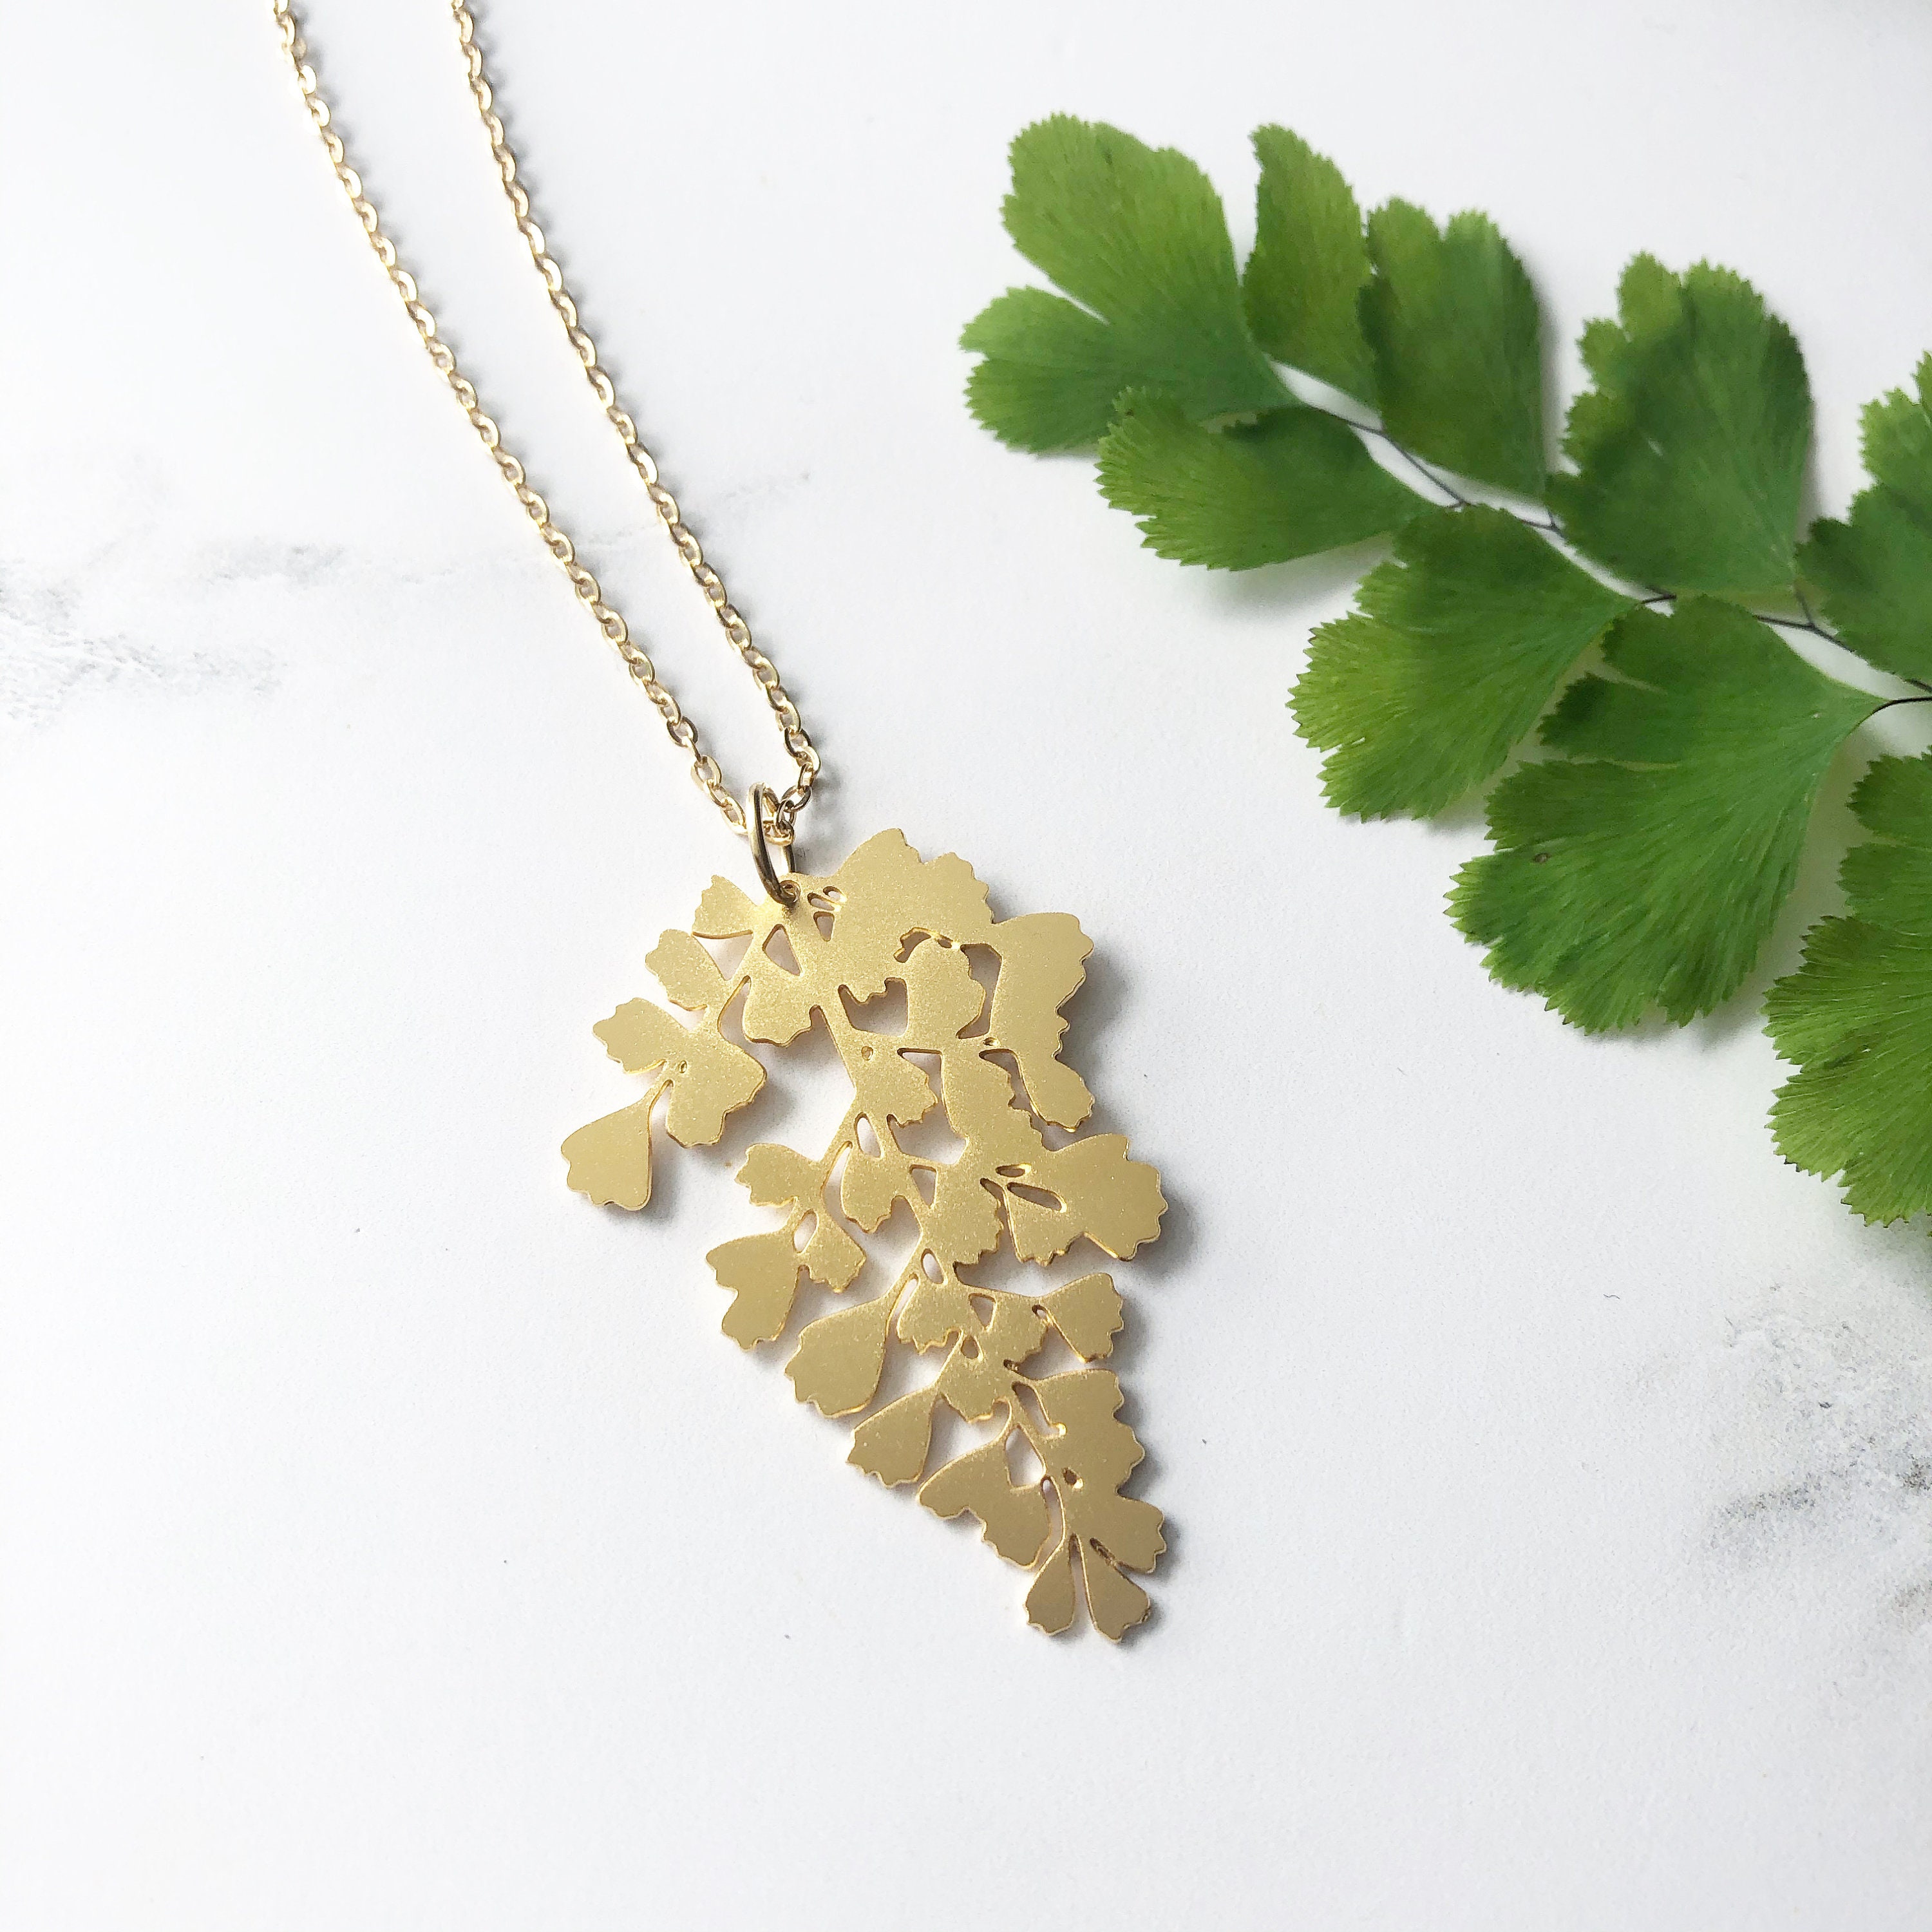 Maidenhair Fern Necklace - Gold Leaf Pendant Jewellery Plant